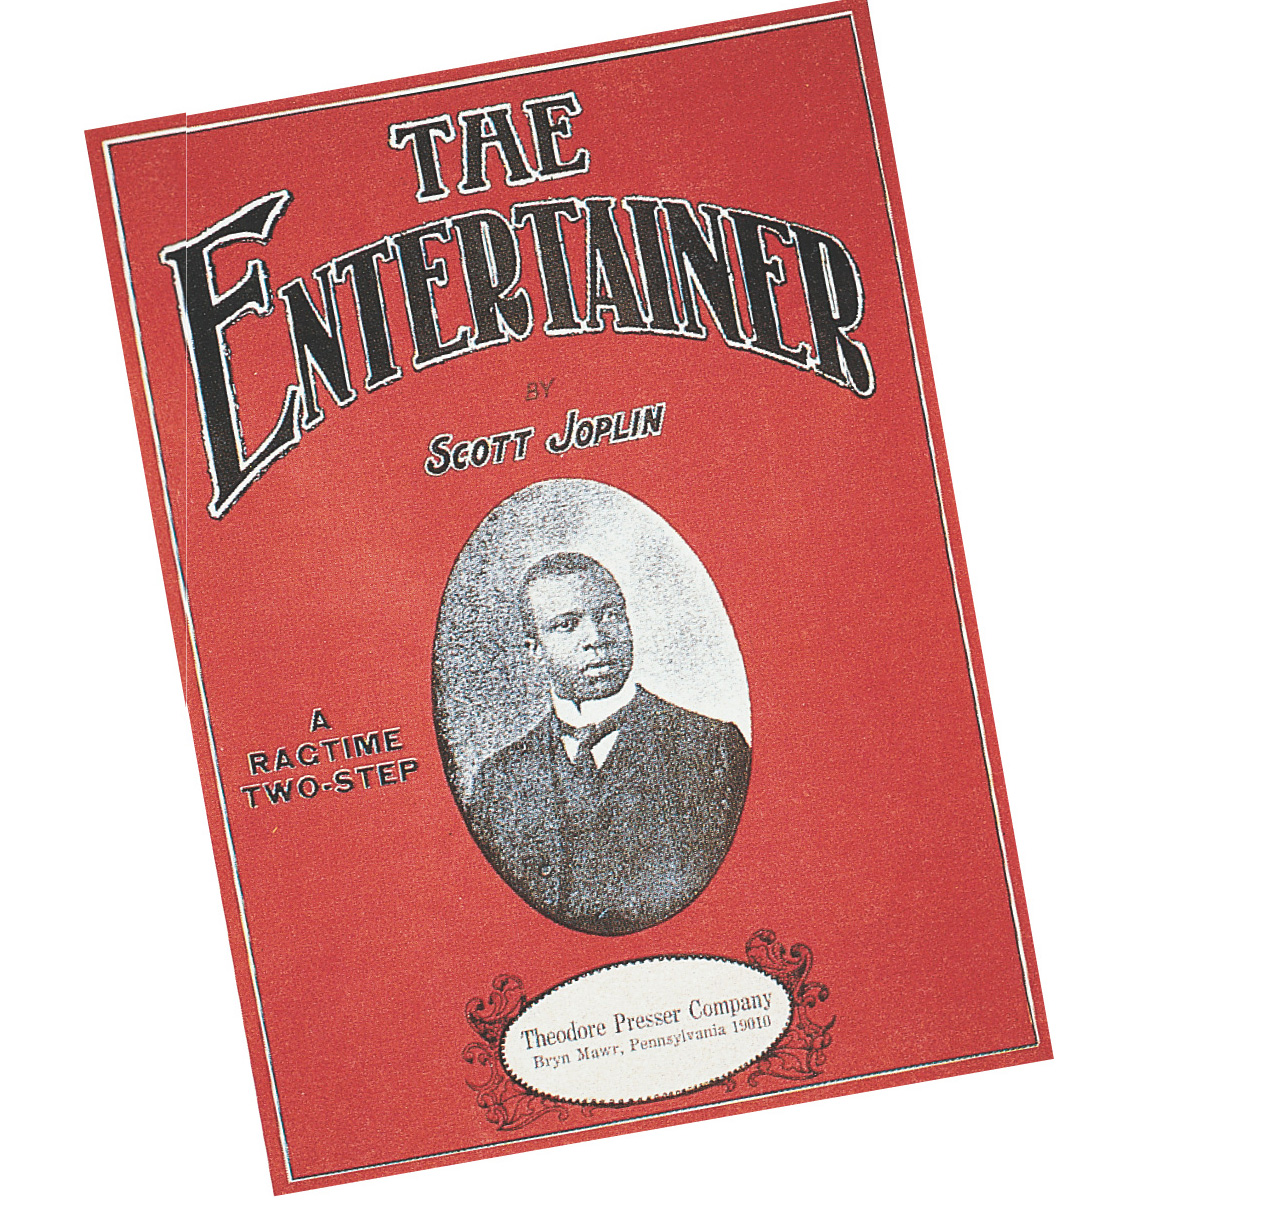 Sheet music titled The Entertainer, by Scott Joplin.